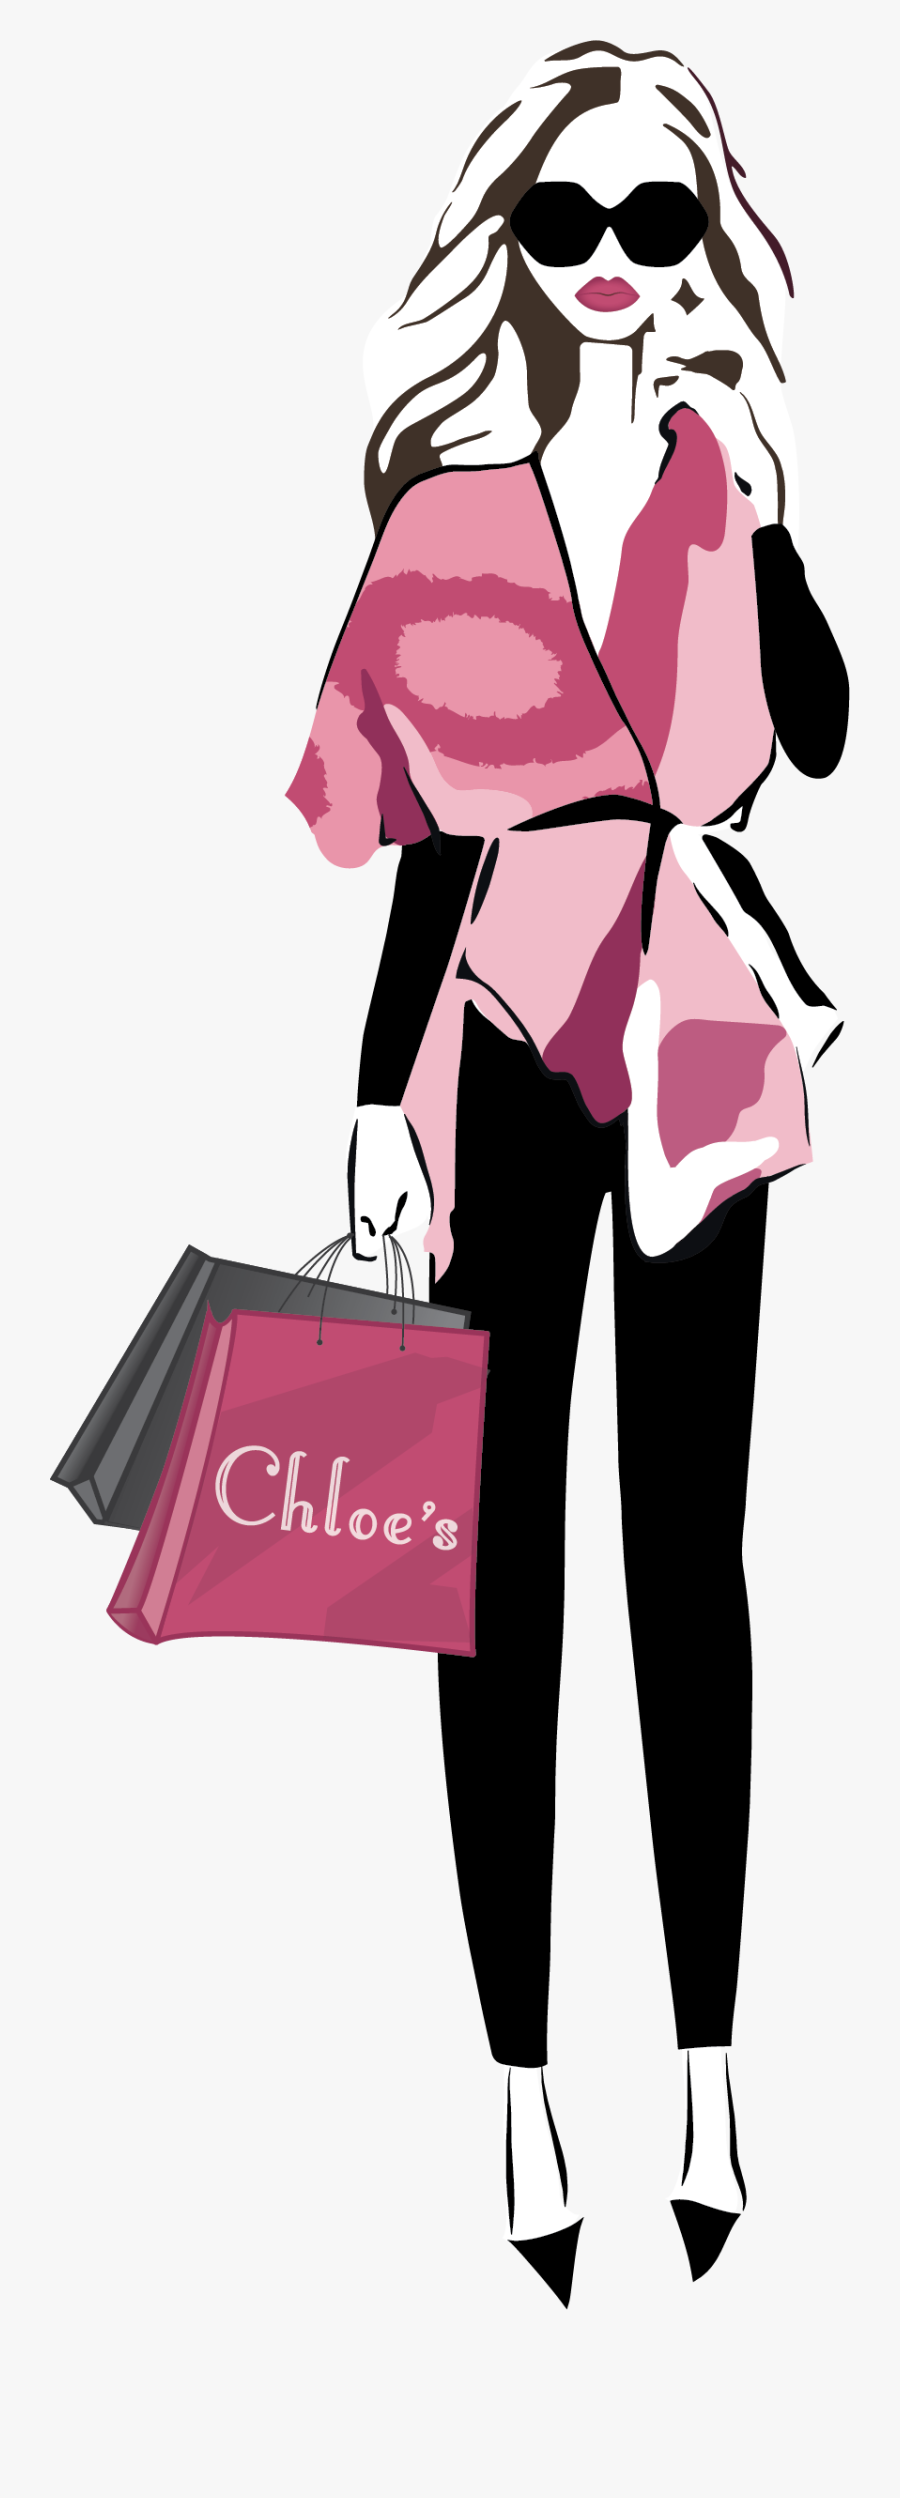 Chloe"s Shopping Girl - Pink Girl Shopping Png, Transparent Clipart